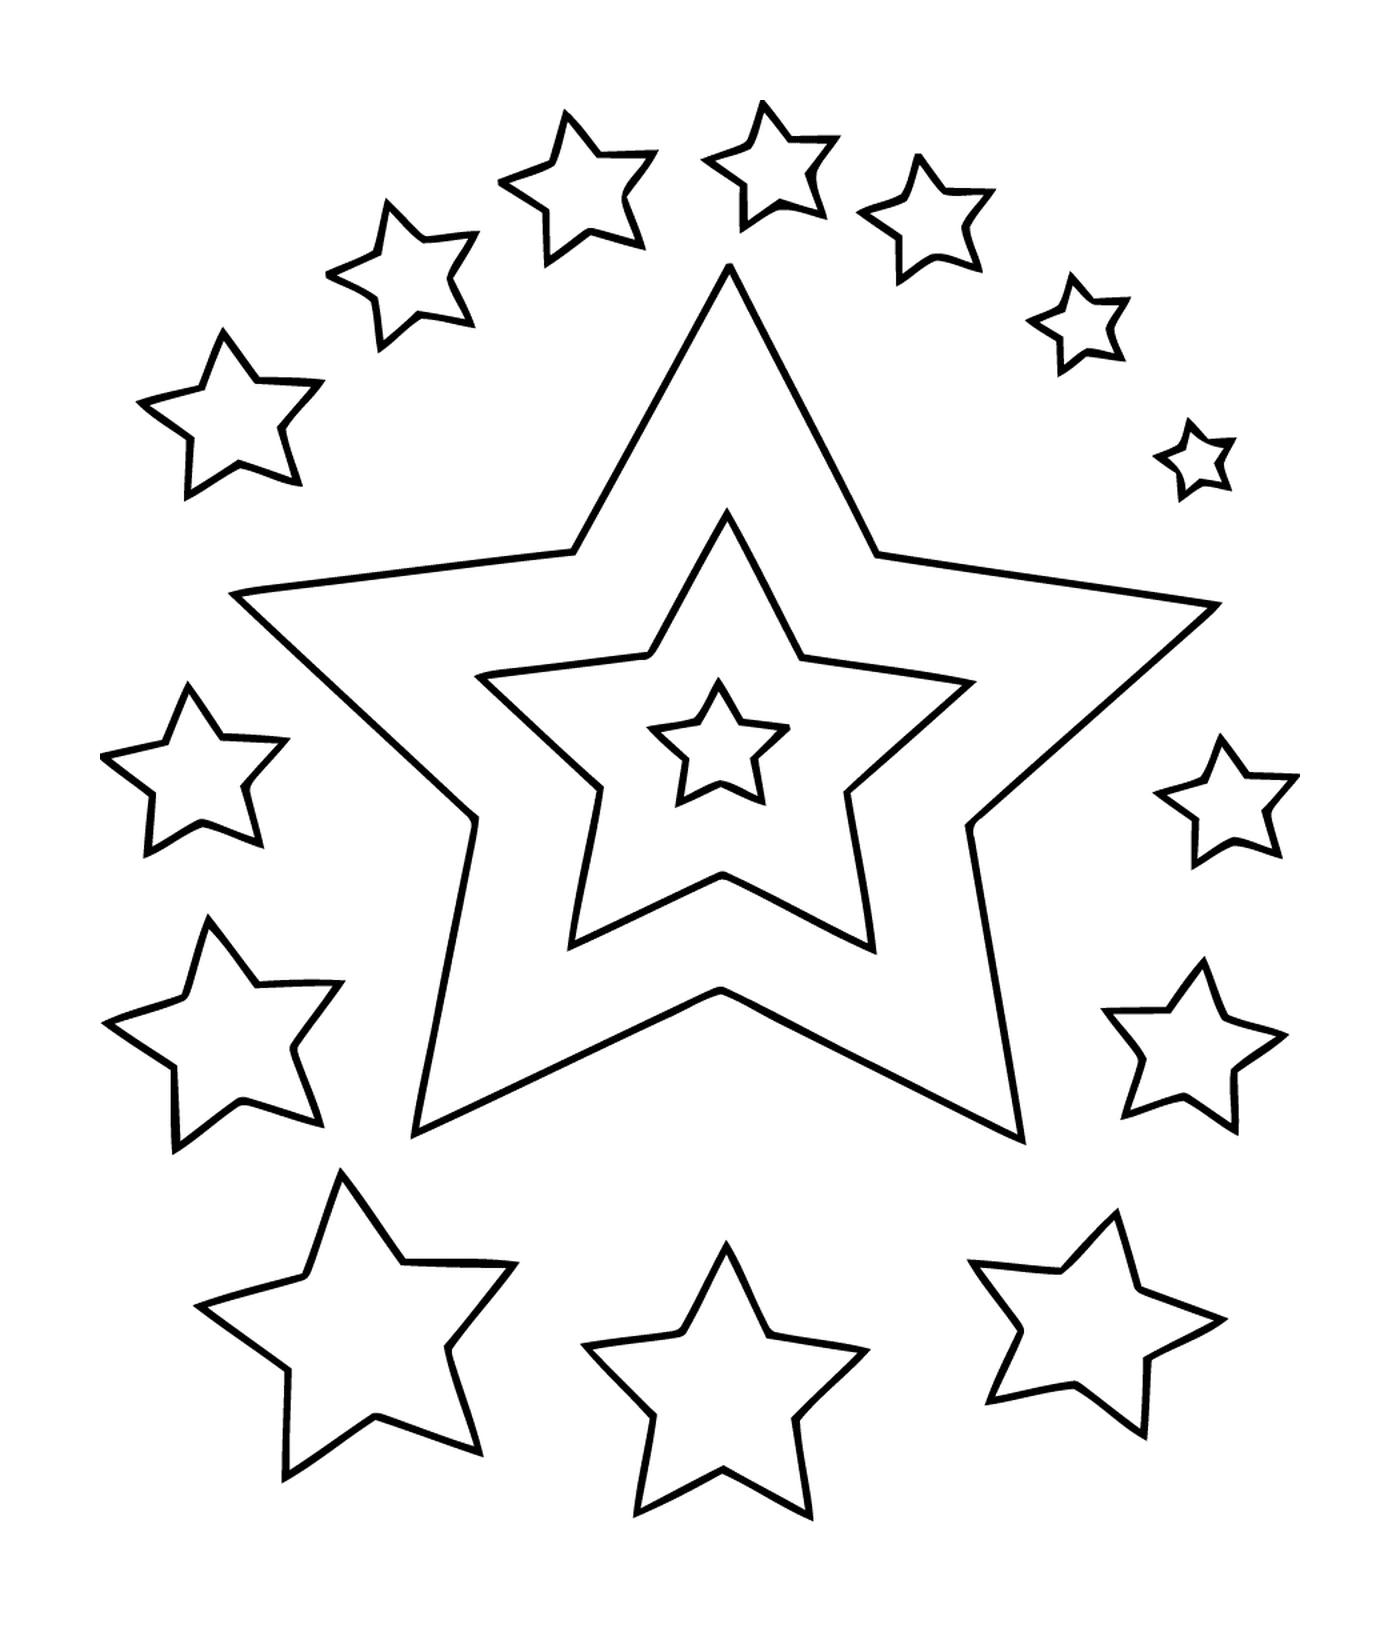  A set of dazzling stars 